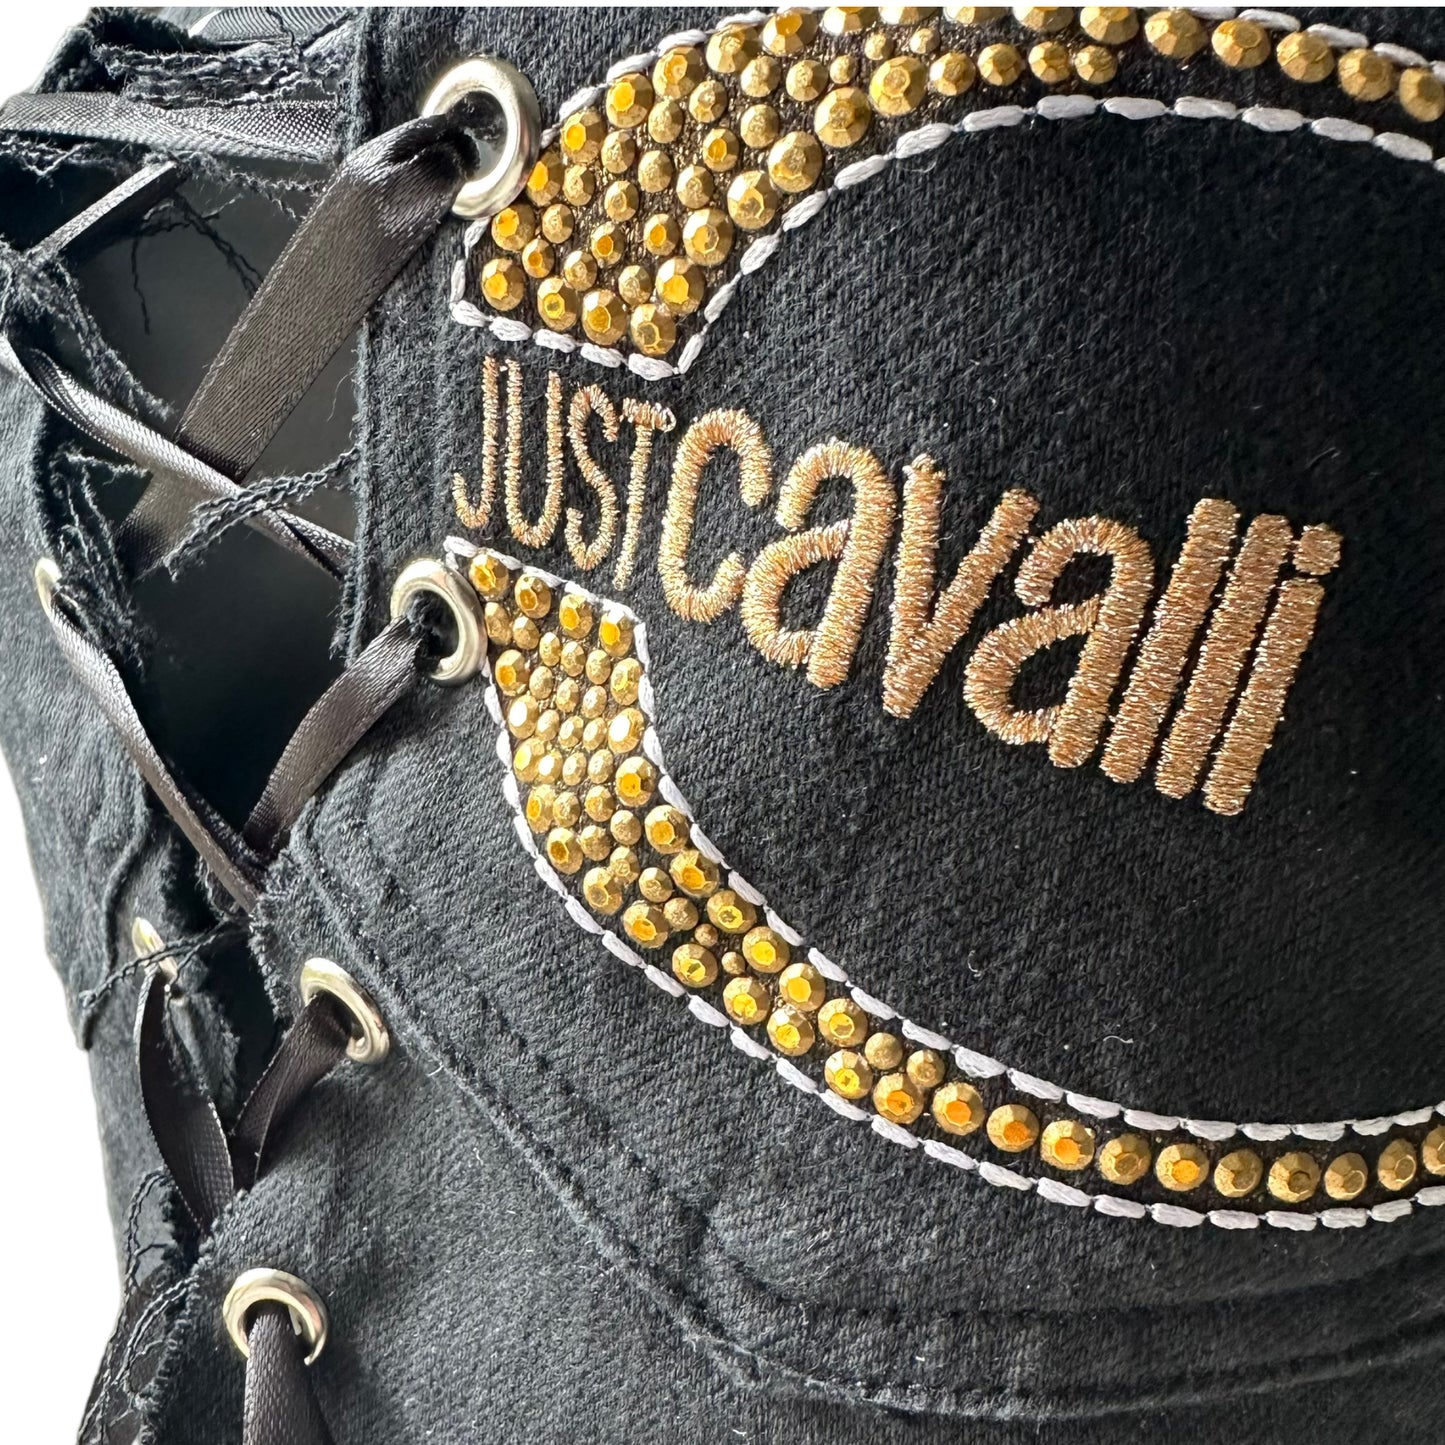 Authentic Cavalli Jeans Reworked into a Black Denim Corset Top 6 8